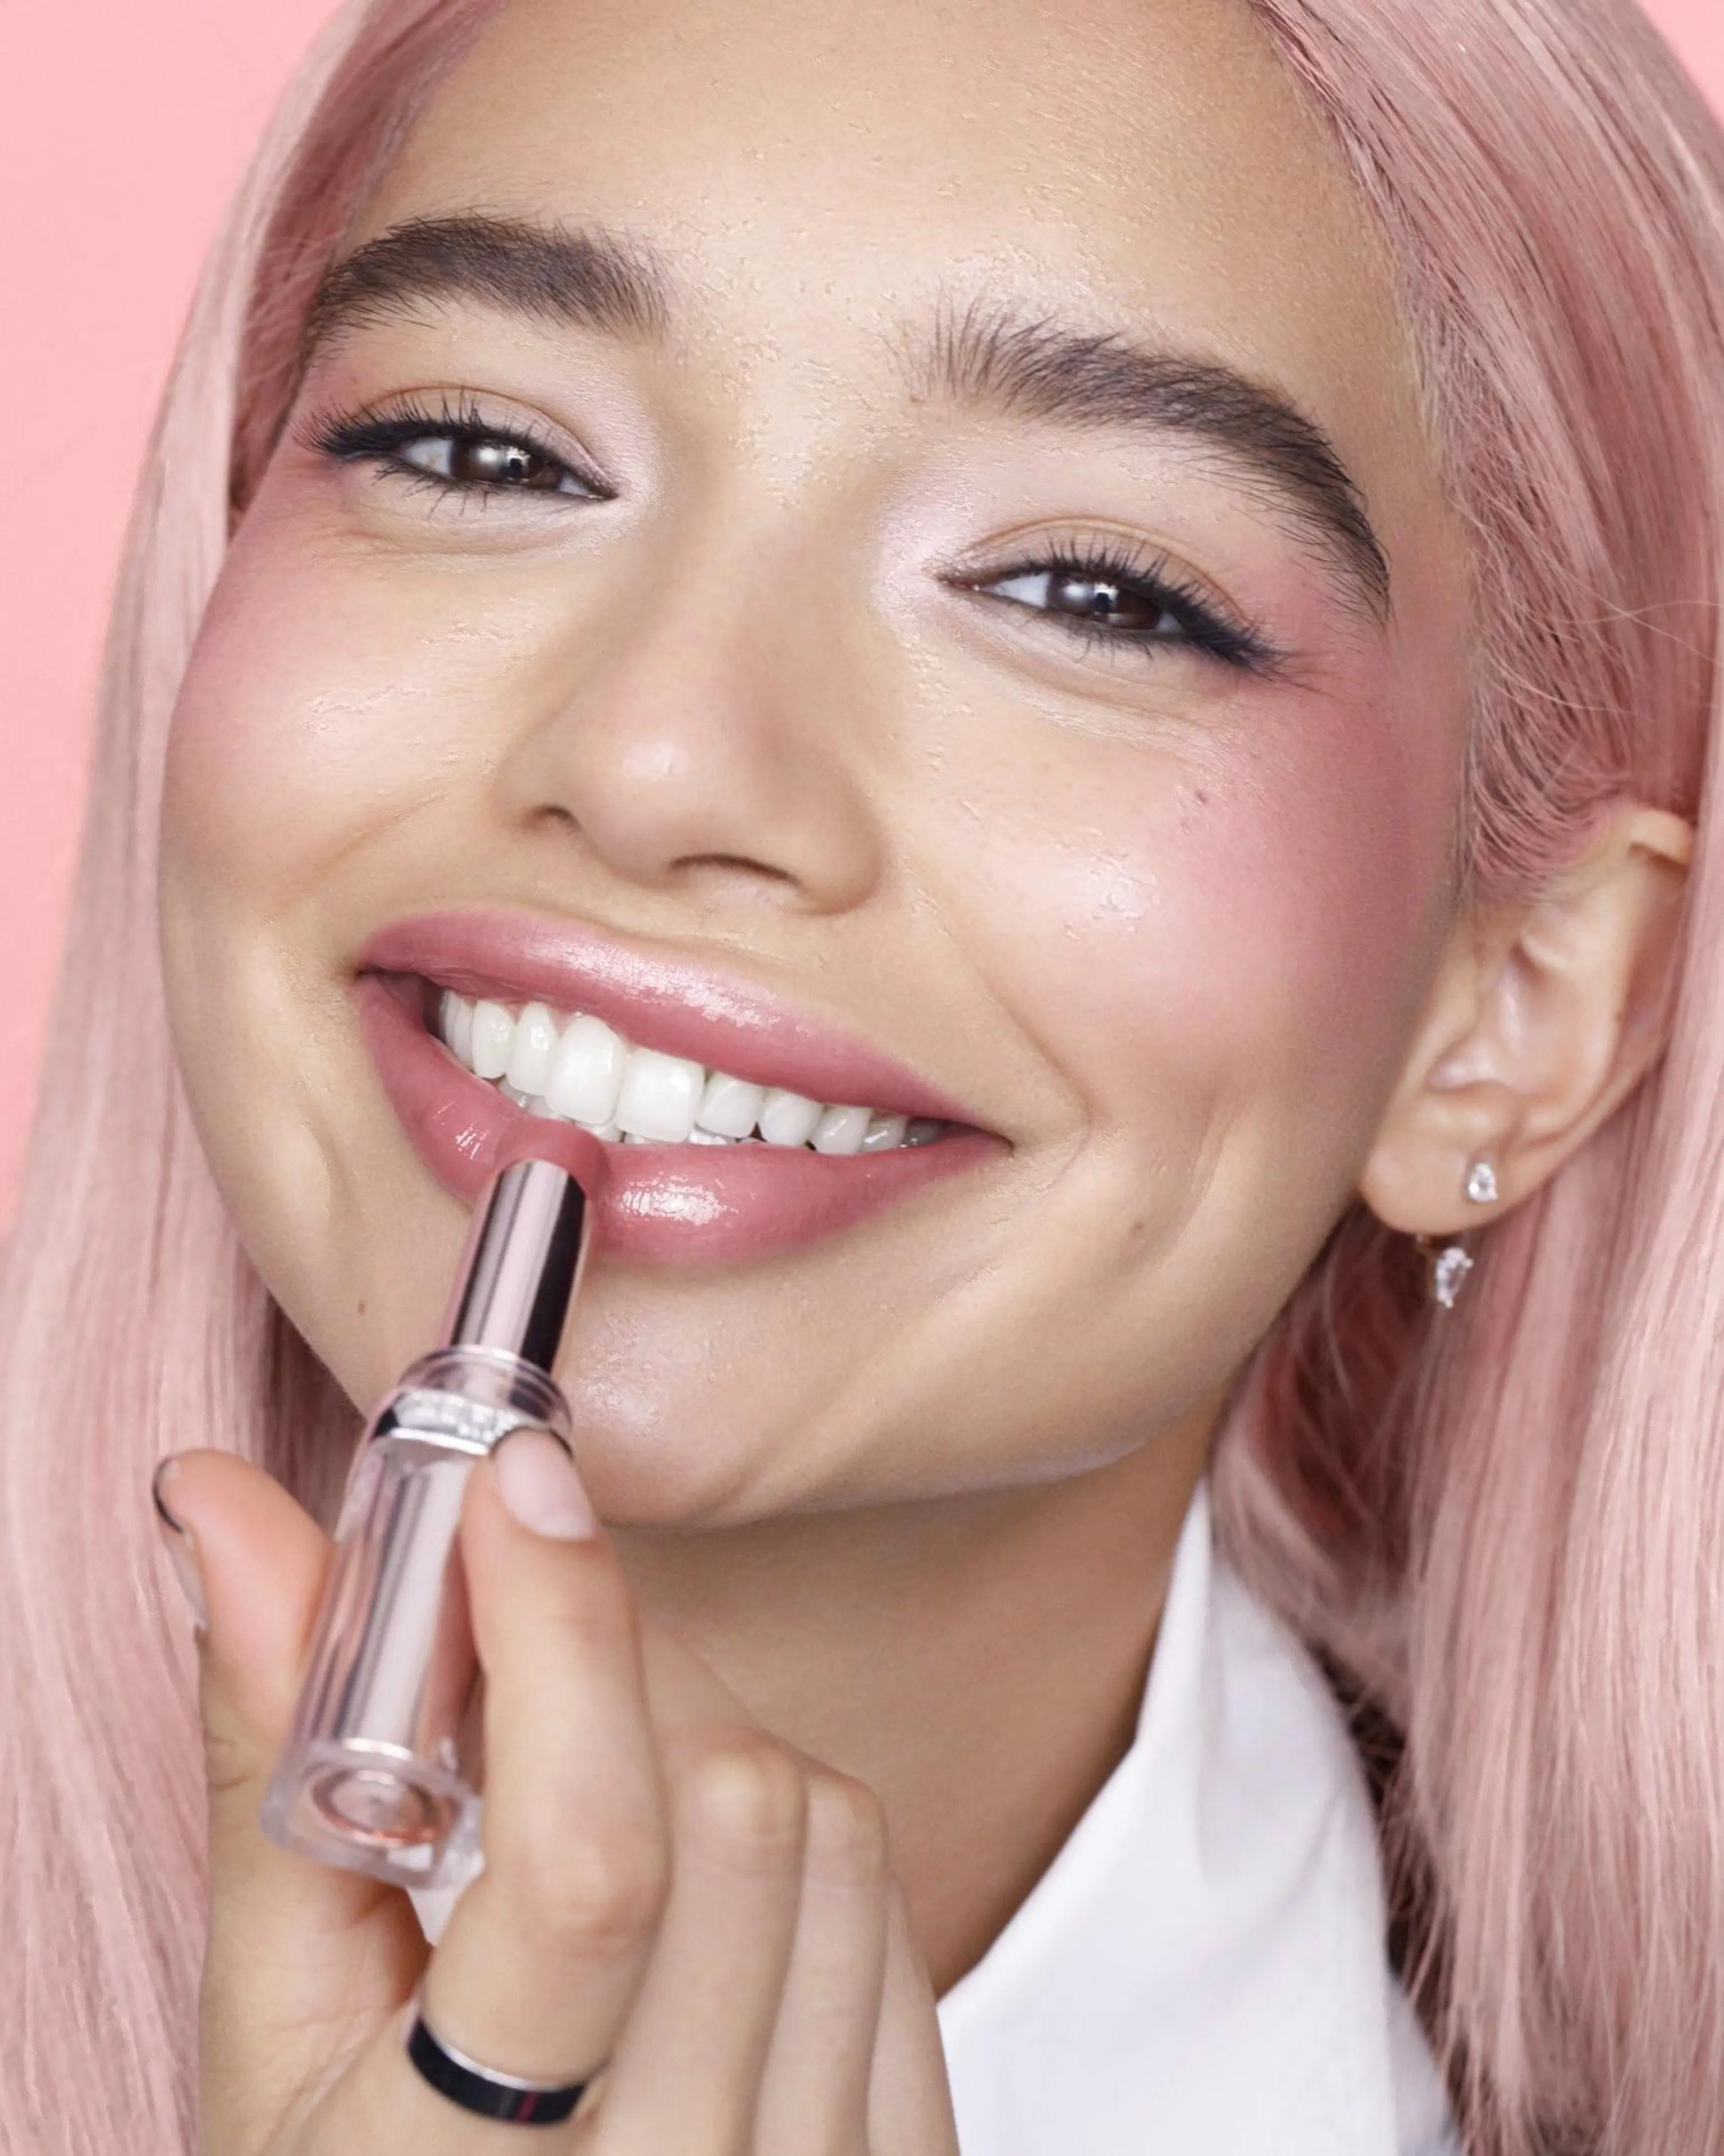 L'Oréal Paris Glow Paradise Balm-in-Lipstick 112 Pastel Exalation huulipuna 4,8g